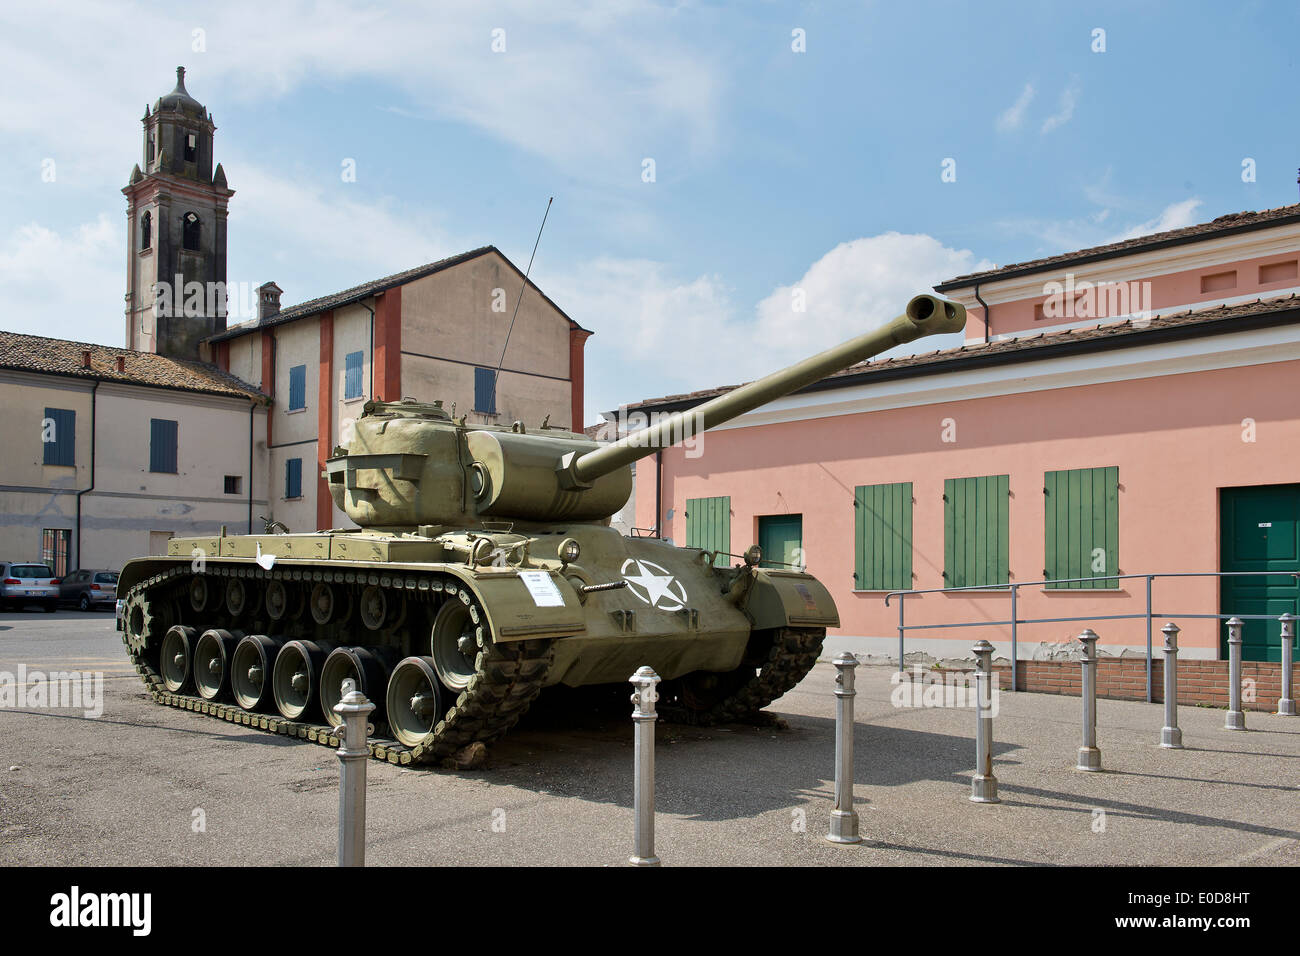 Italy, Emilia Romagna, Brescello, Tank Stock Photo